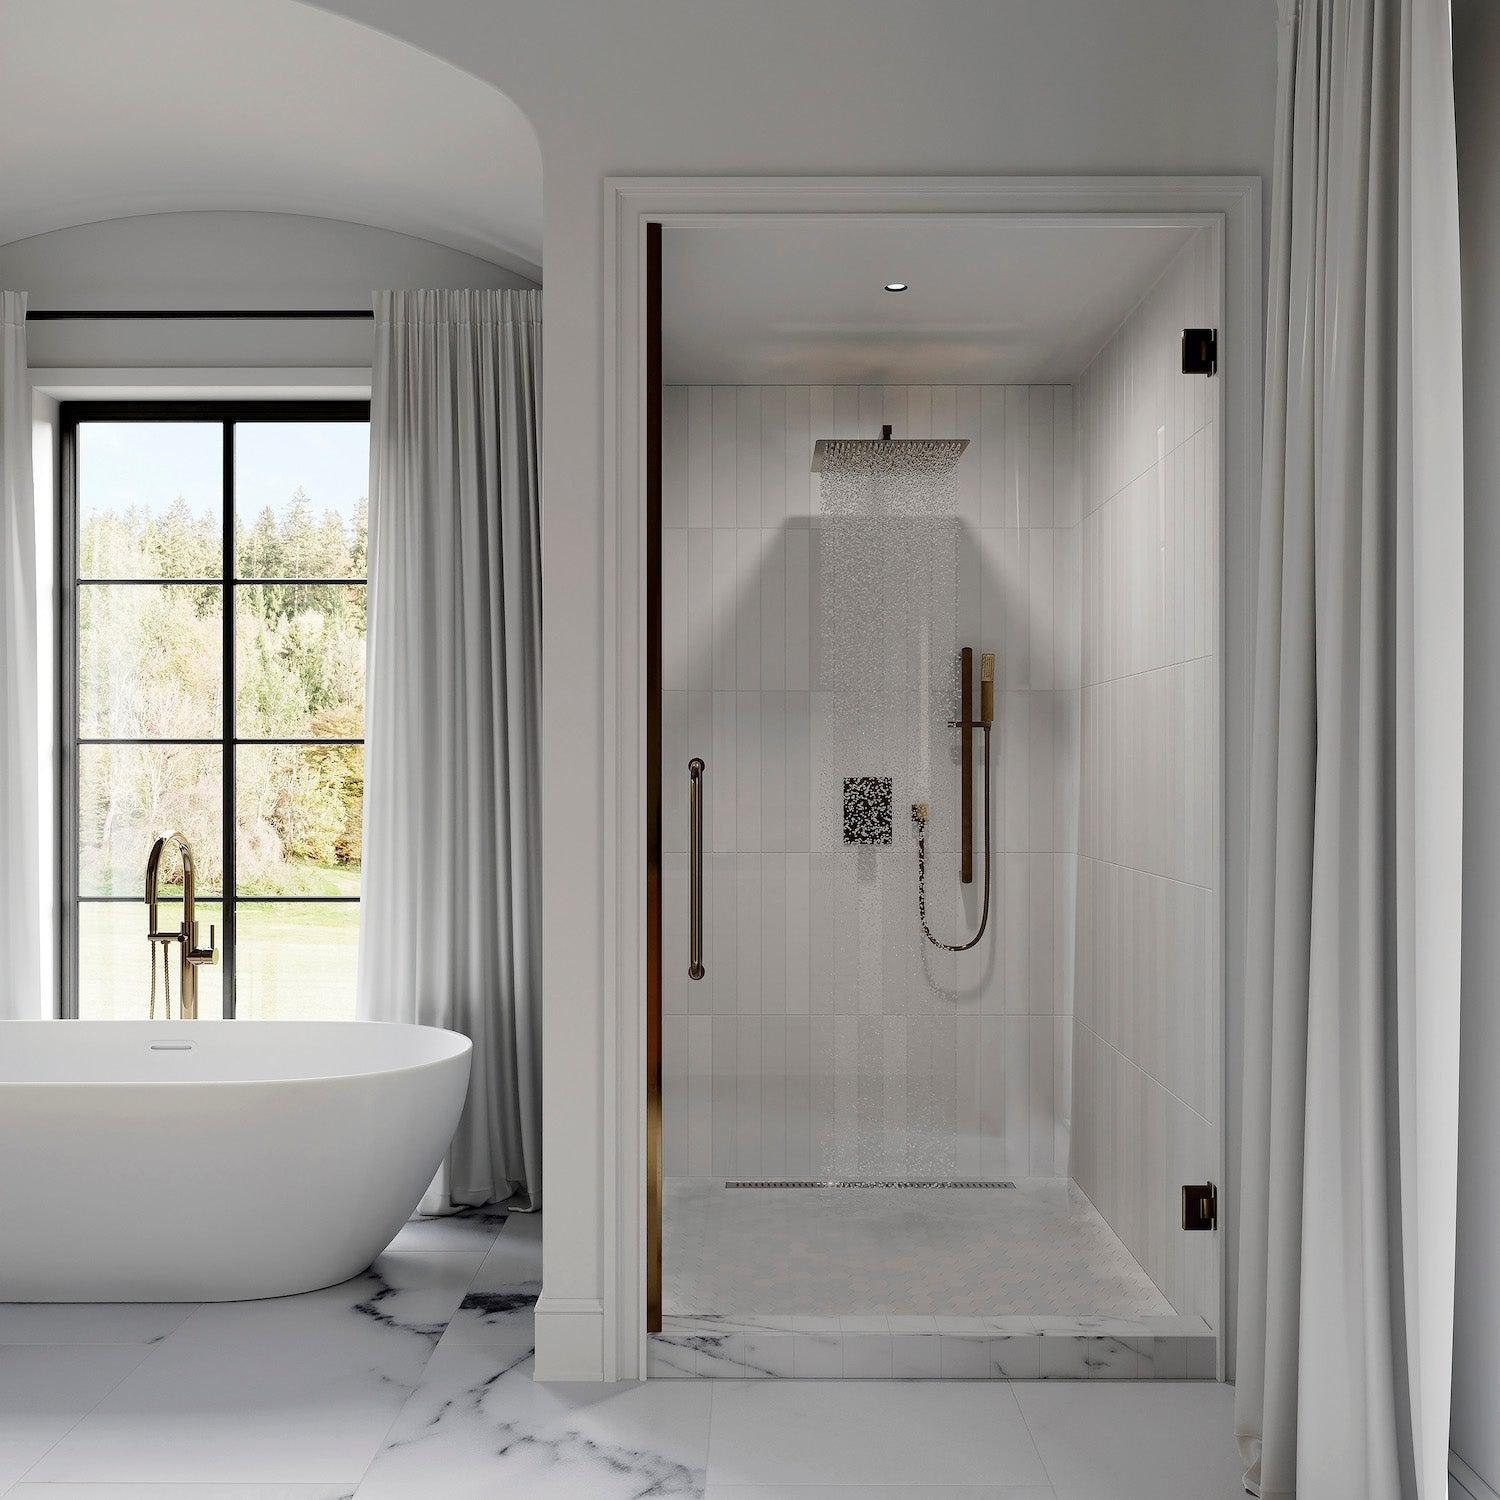 ZLINE Crystal Bay Thermostatic Shower System (CBY-SHS-T2) in a modern luxury bathroom